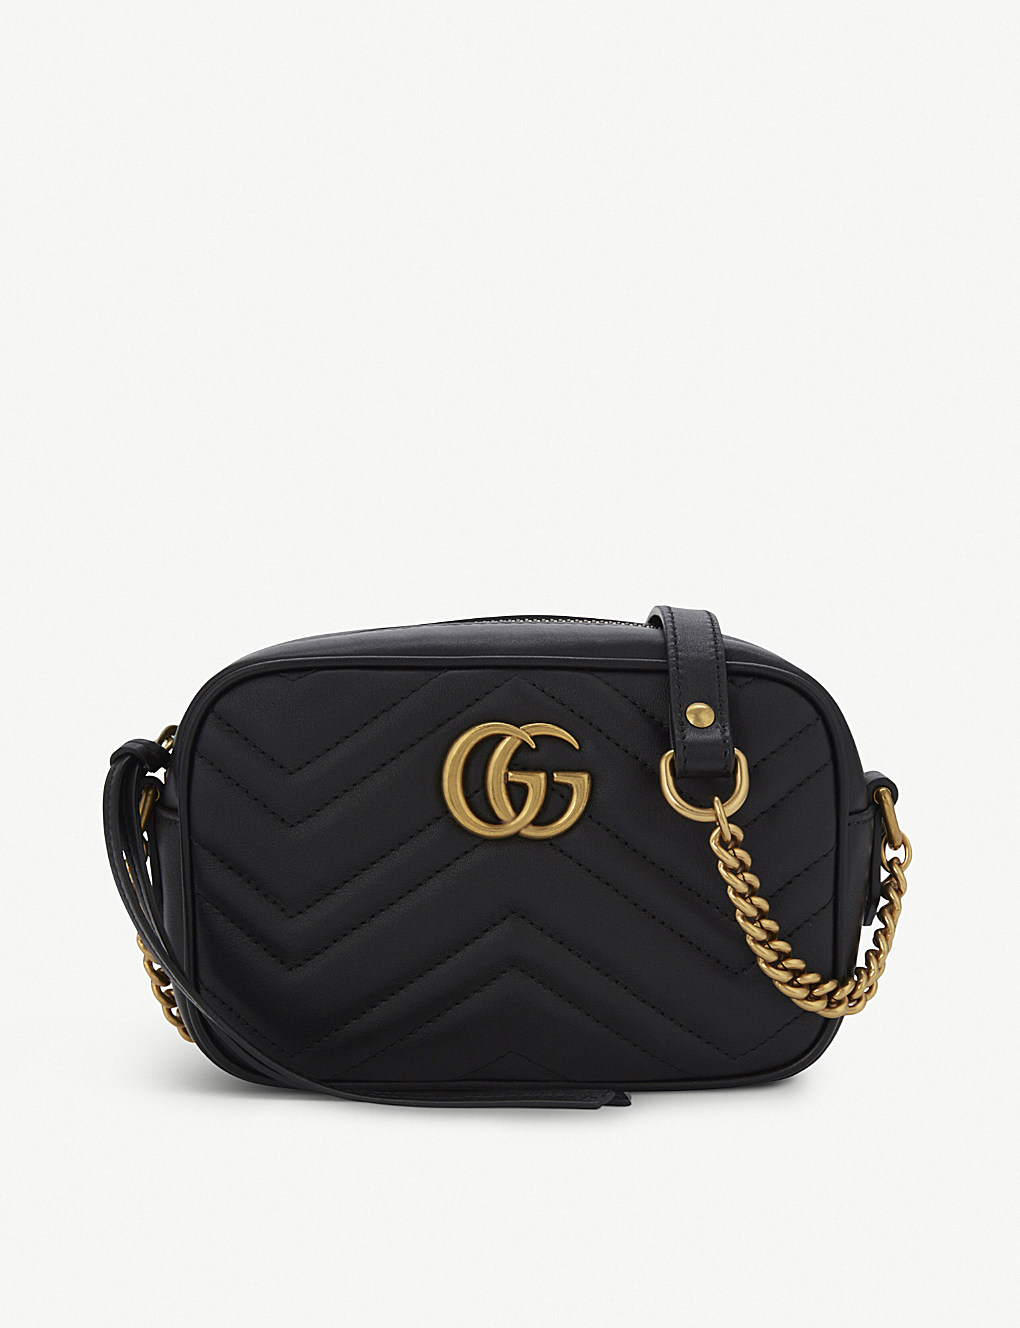 price of gucci handbags